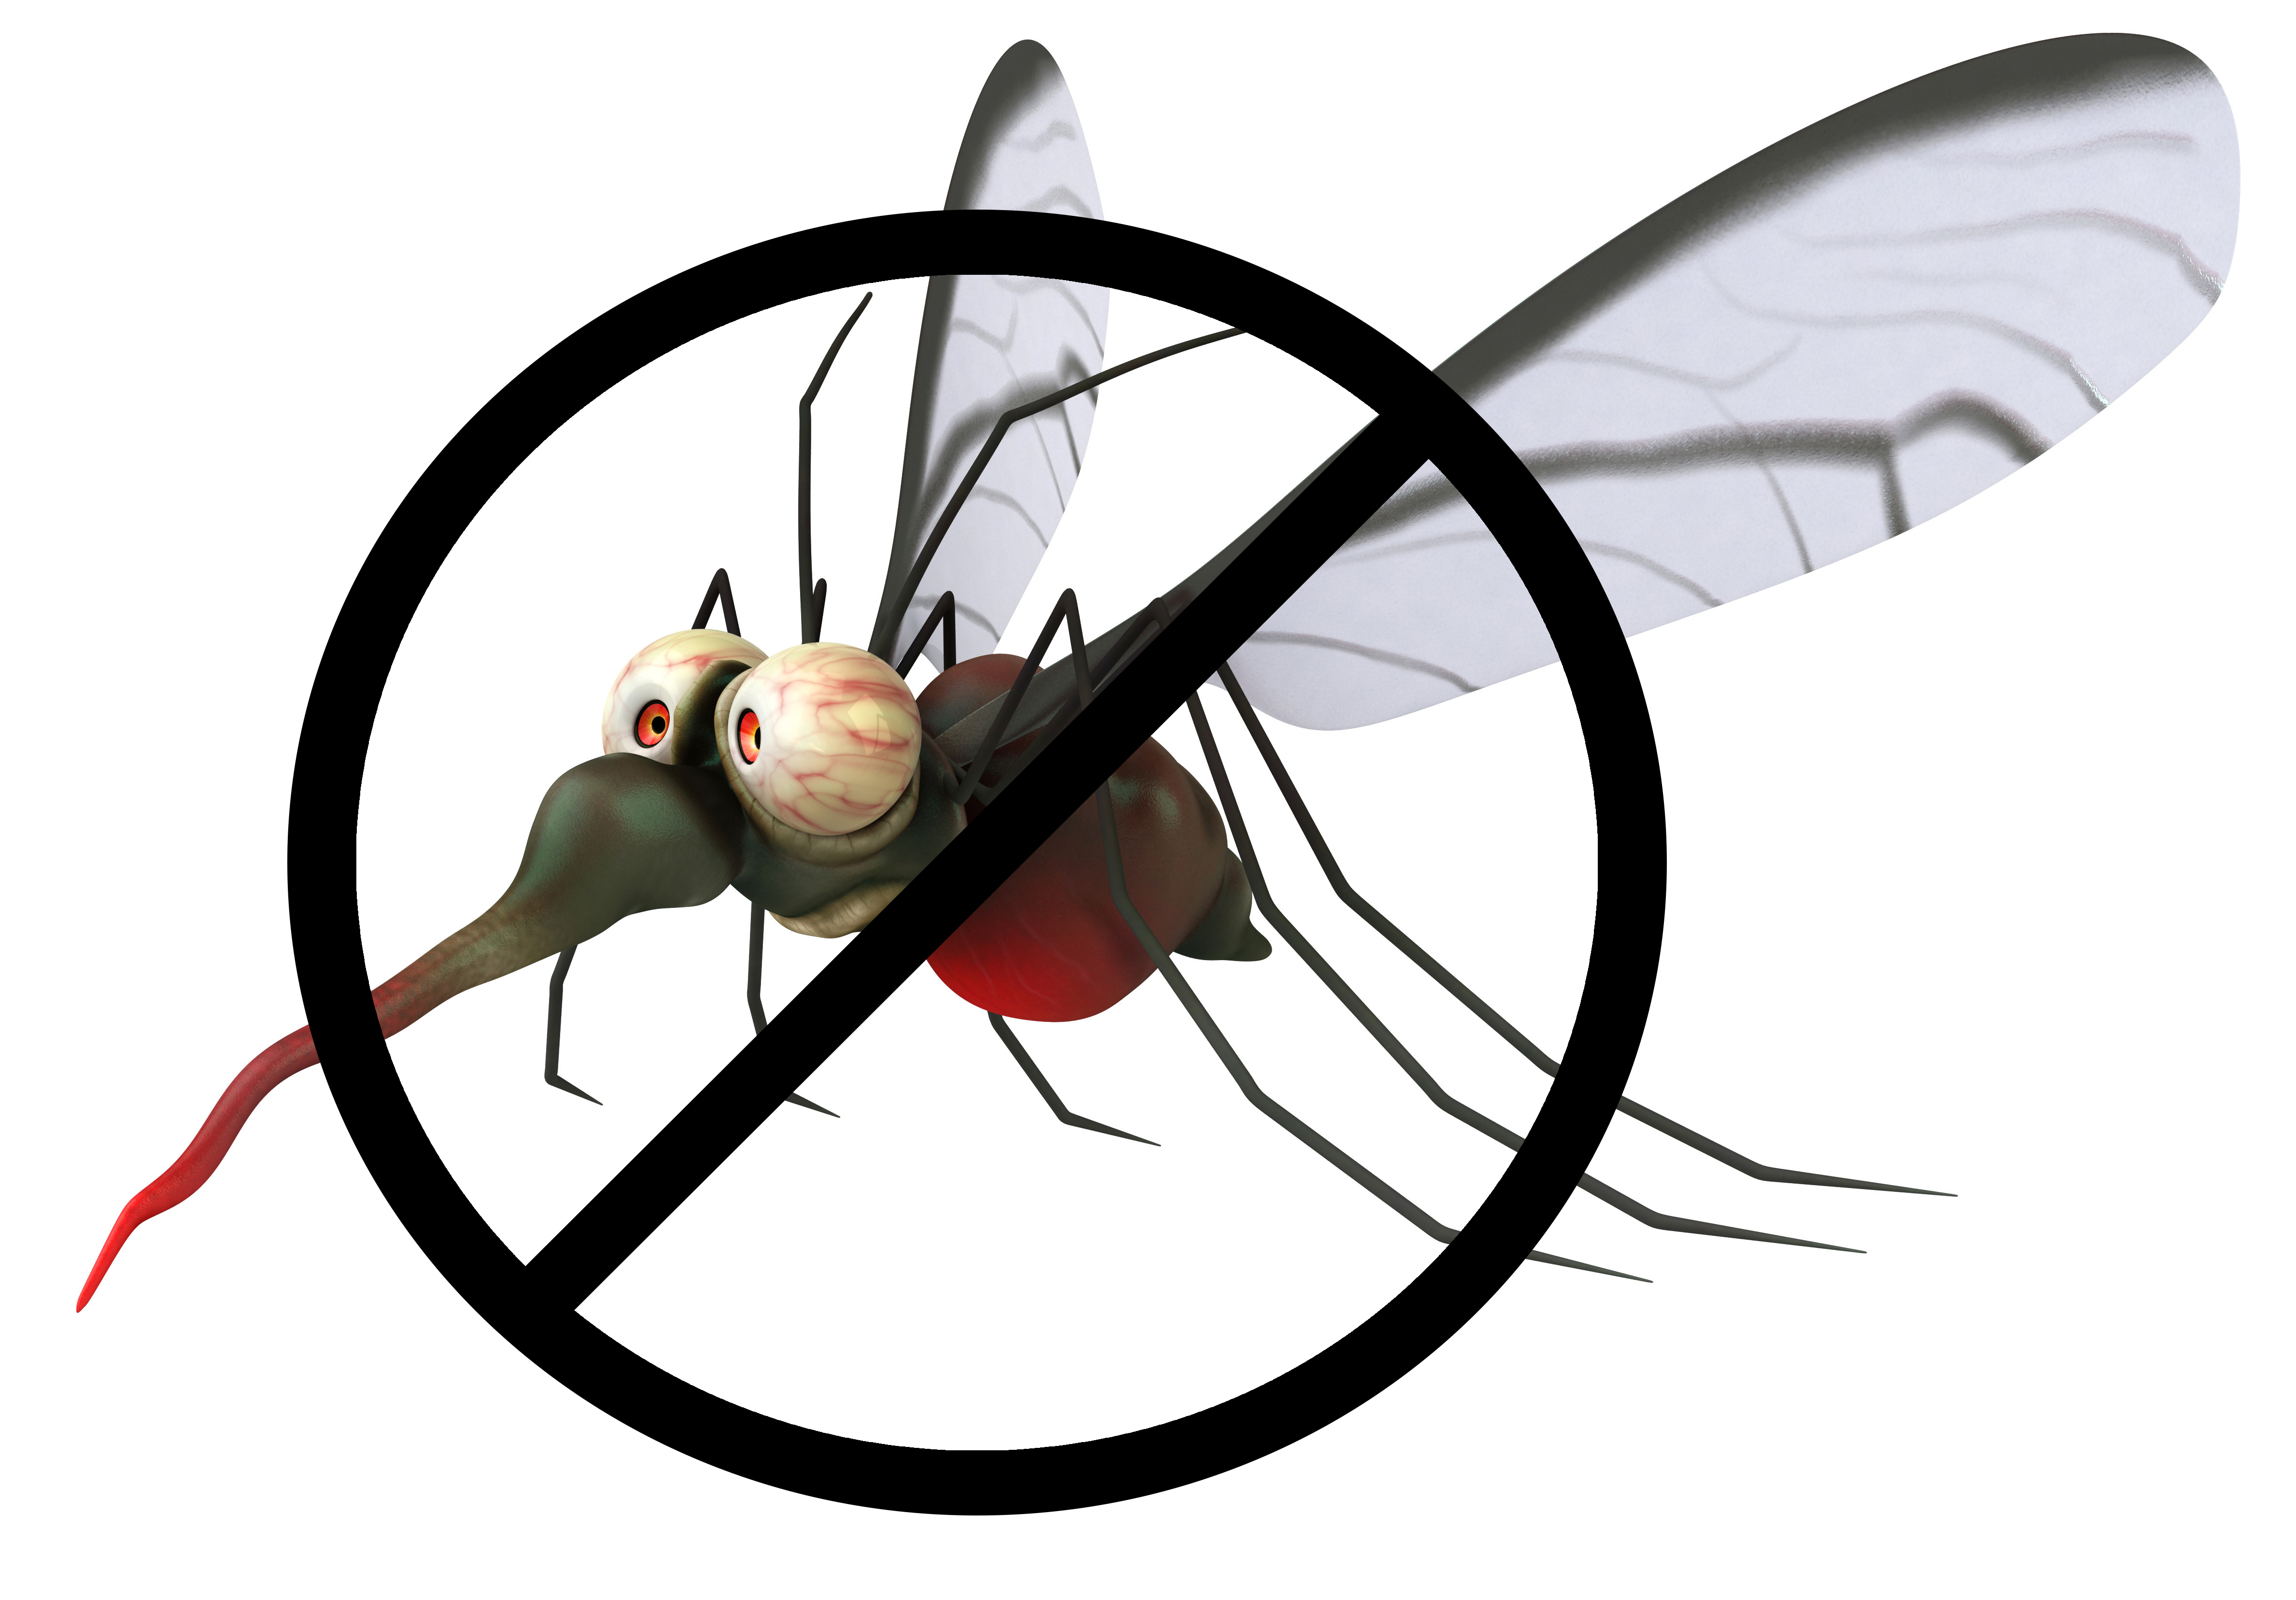 Fun mosquito